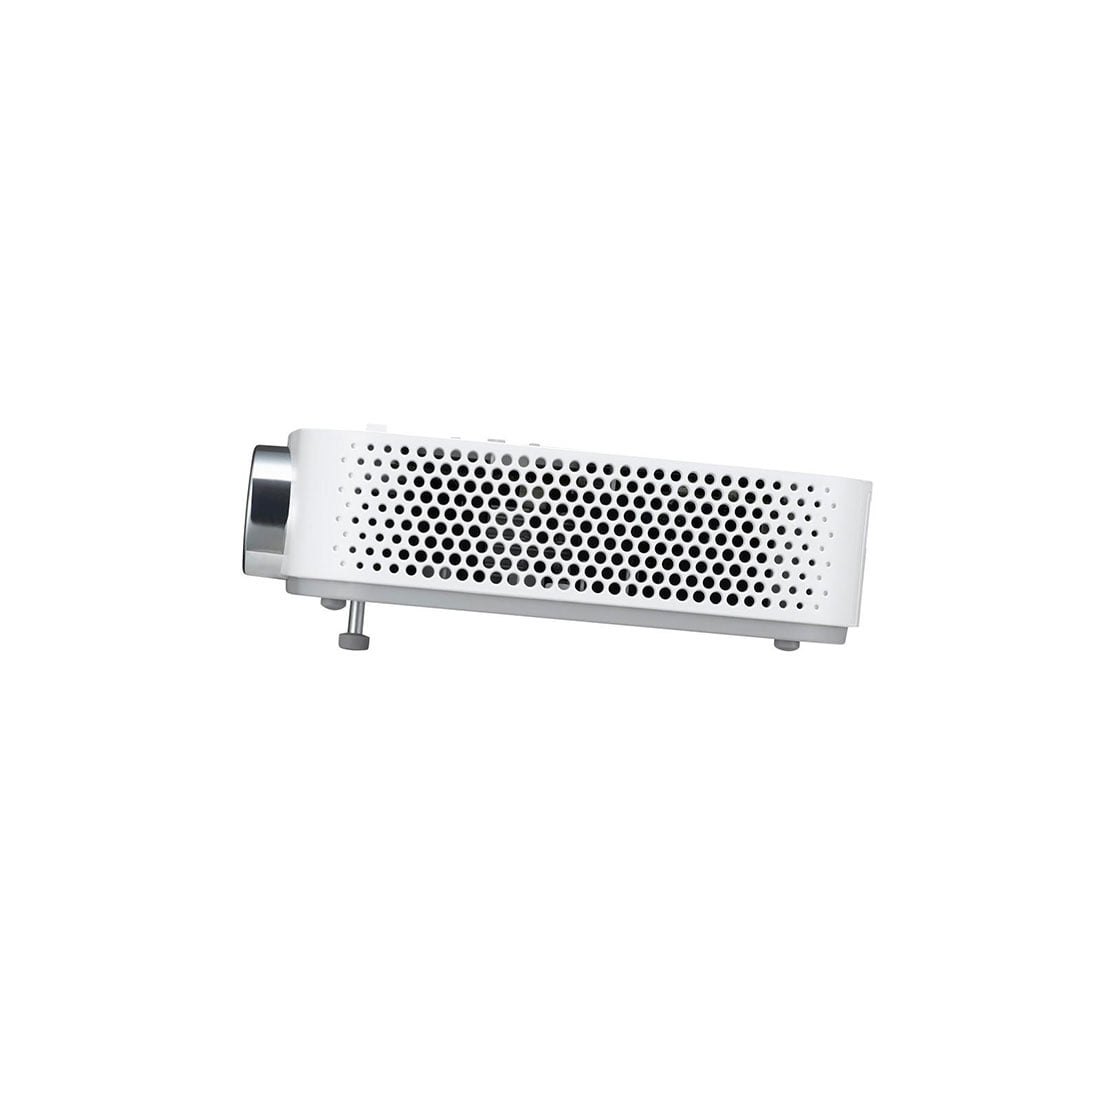 LG PF50KA Full HD LED Smart Home Theater CineBeam Projector - 2021 Model